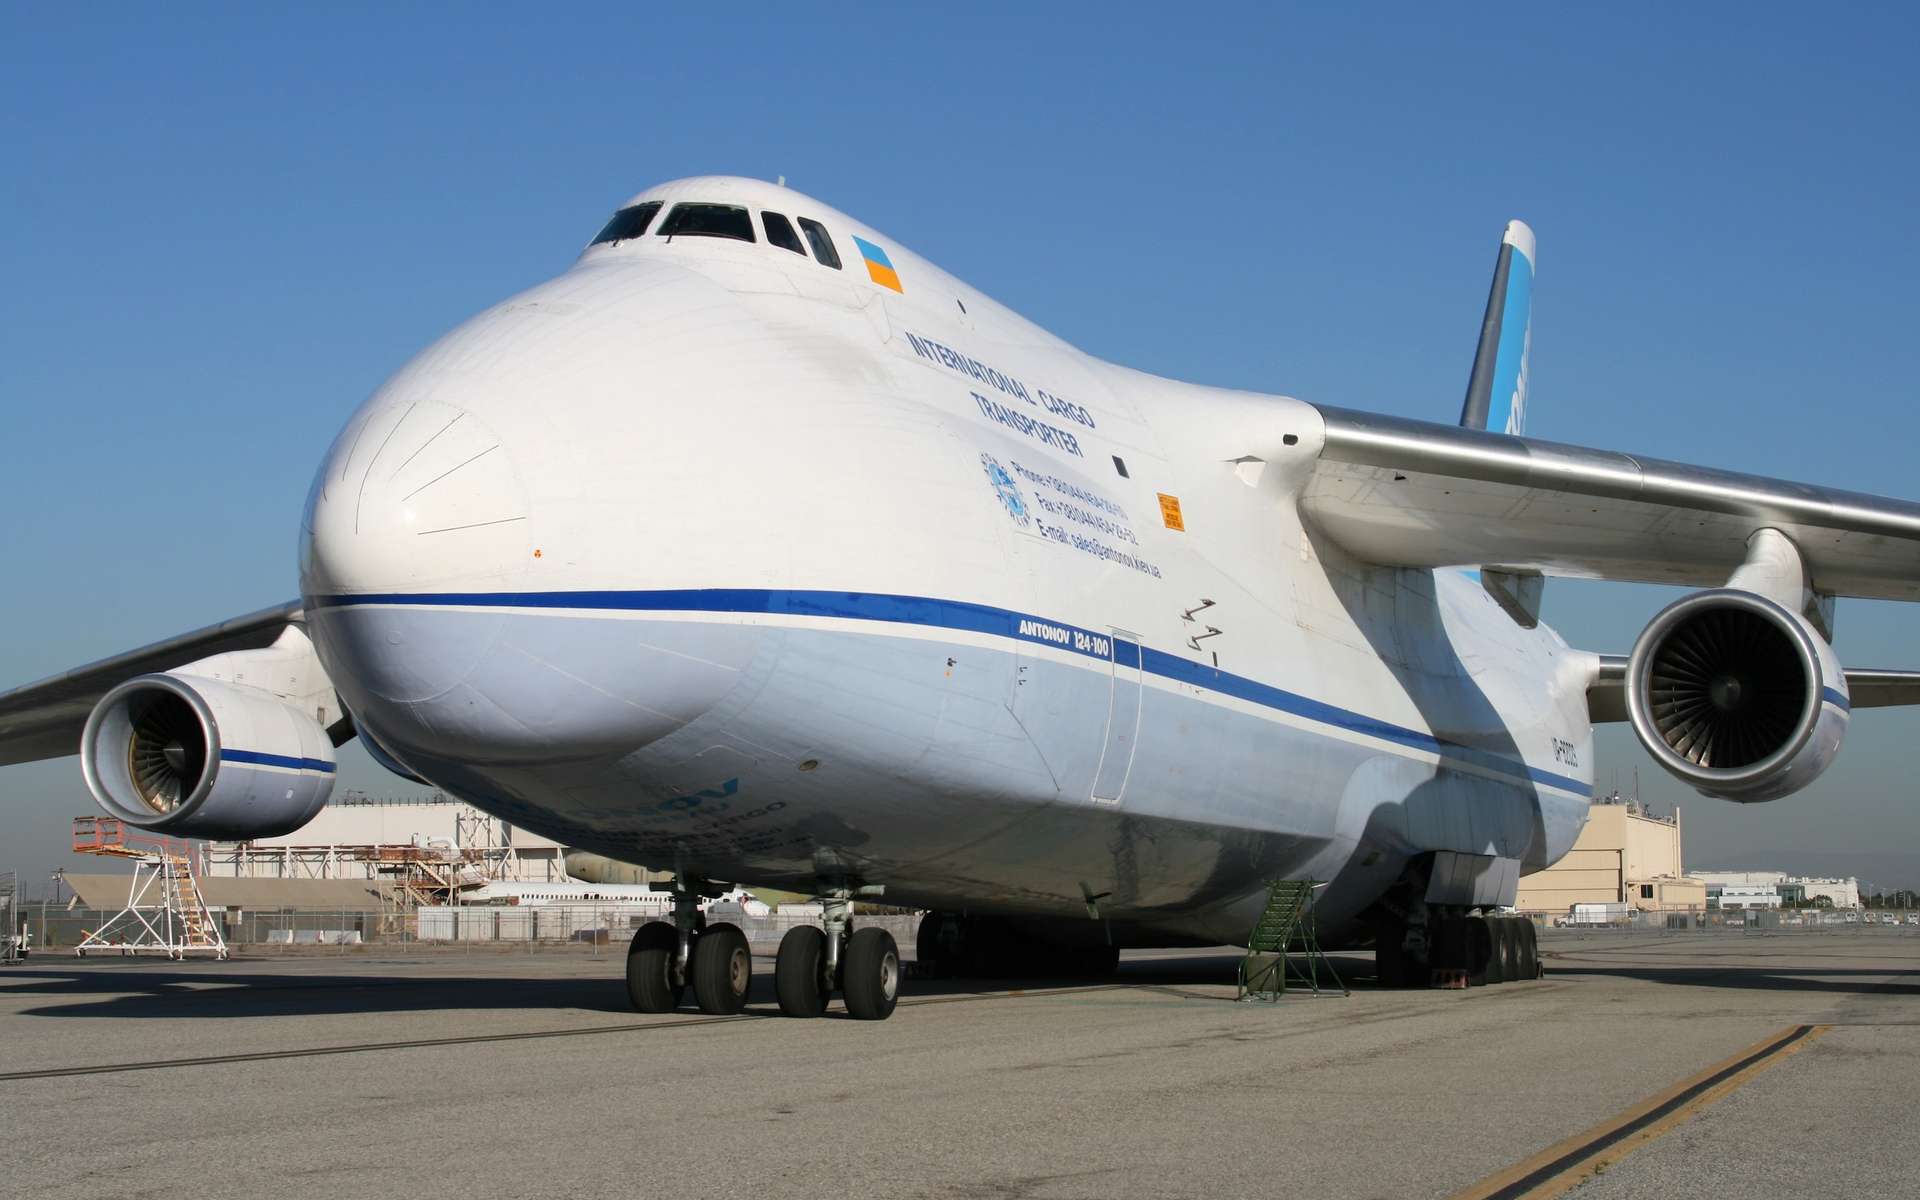 Un Antonov An-124, le plus gros avion cargo produit en série. © John Murphy, Flickr